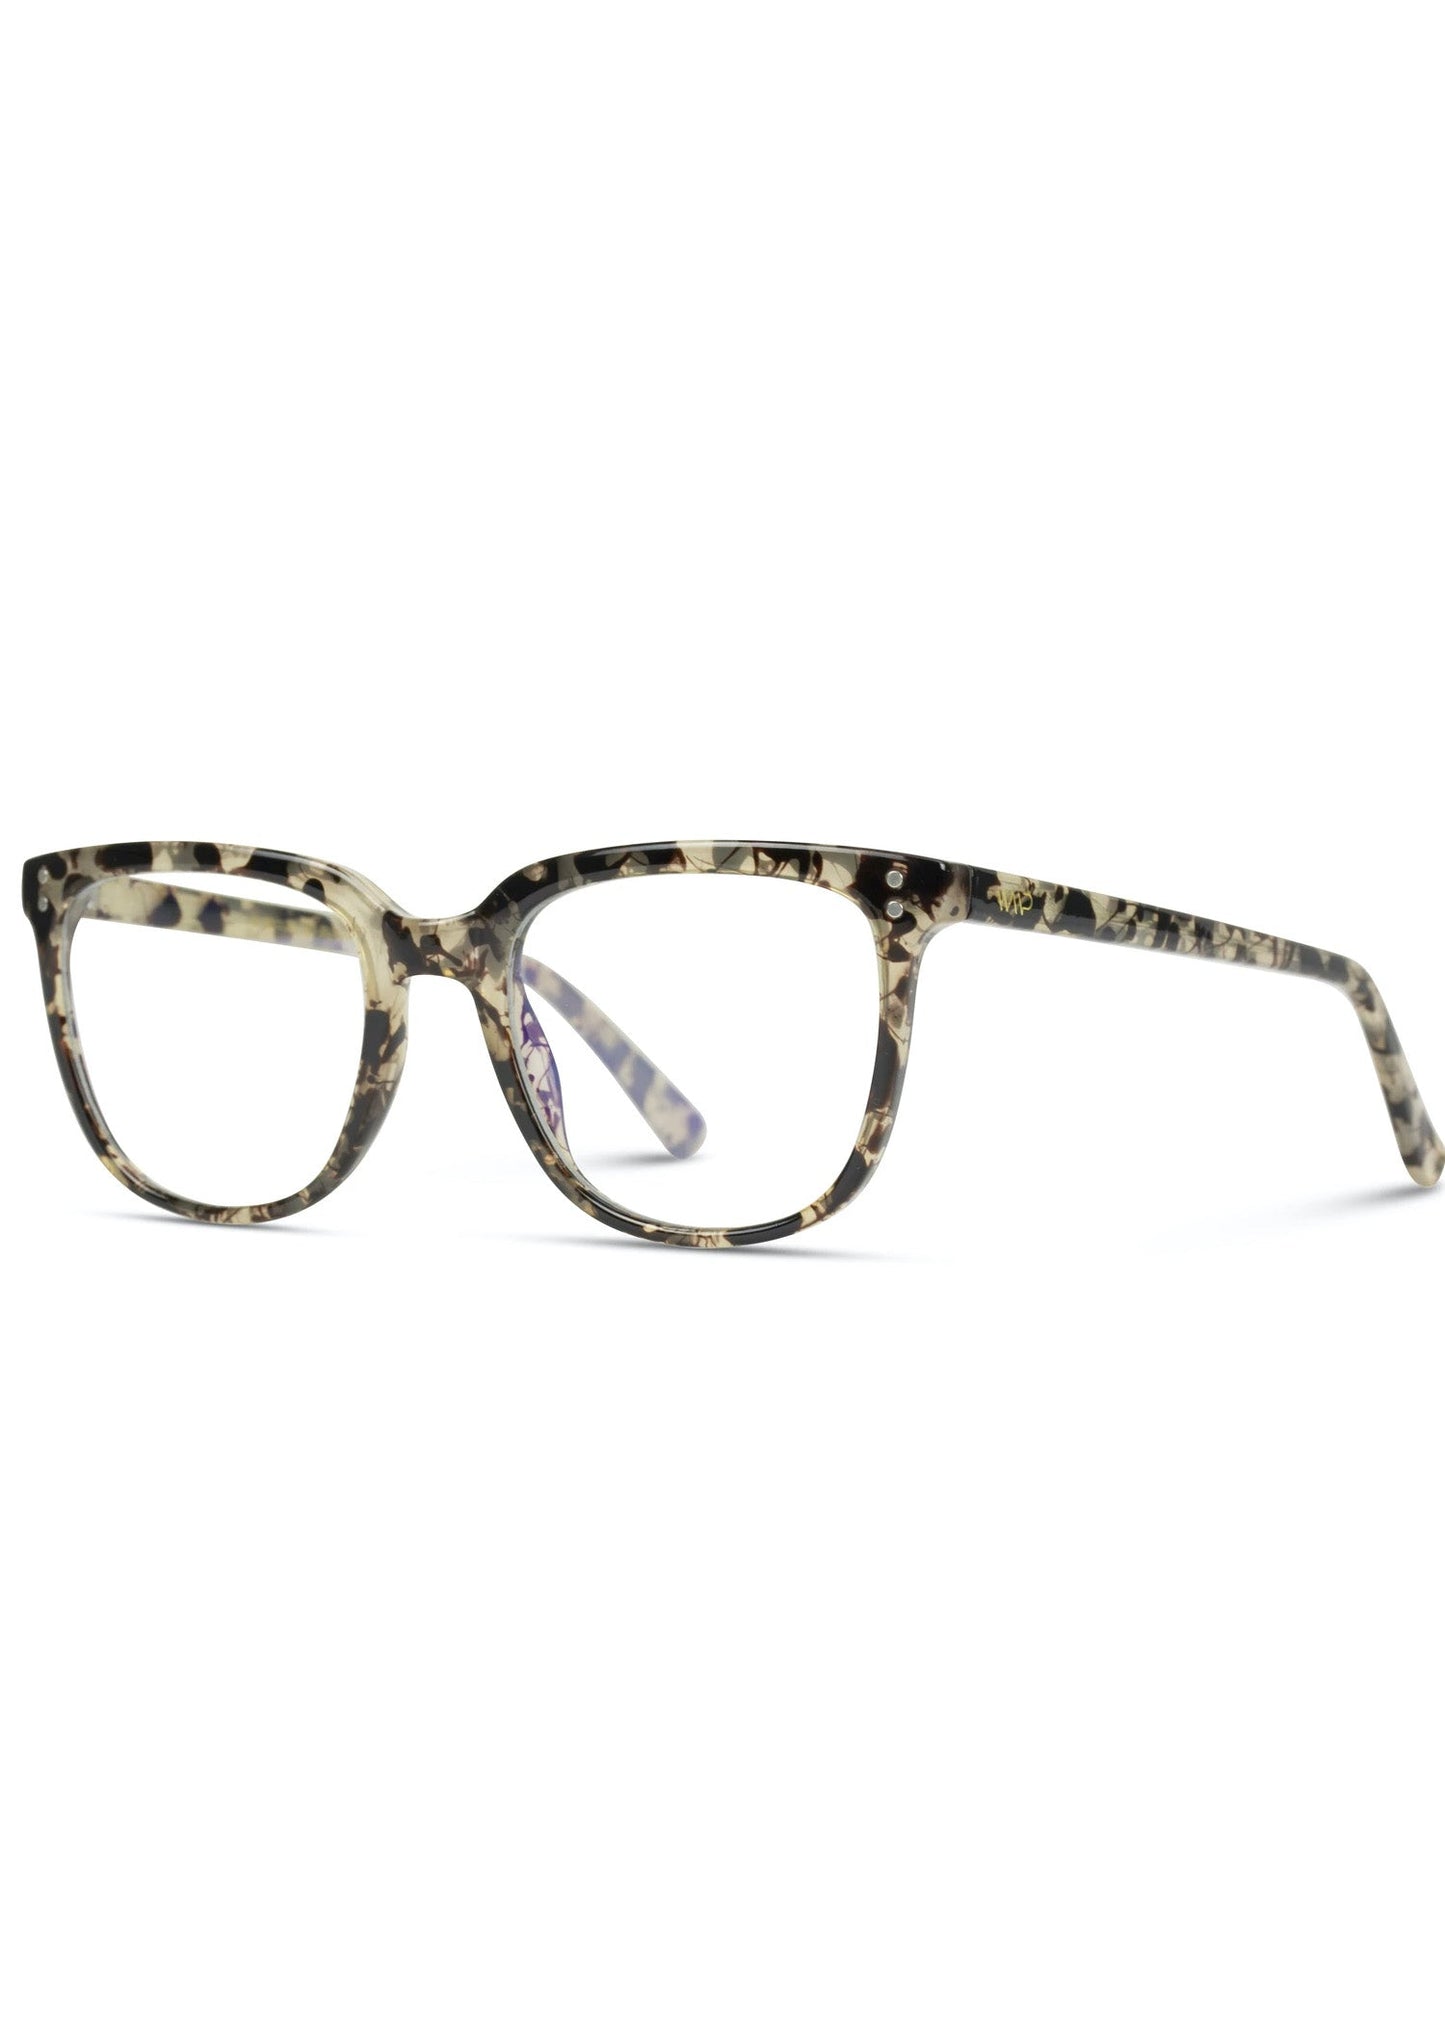 Cream Tortoise Frame Blue Light Glasses Accessories